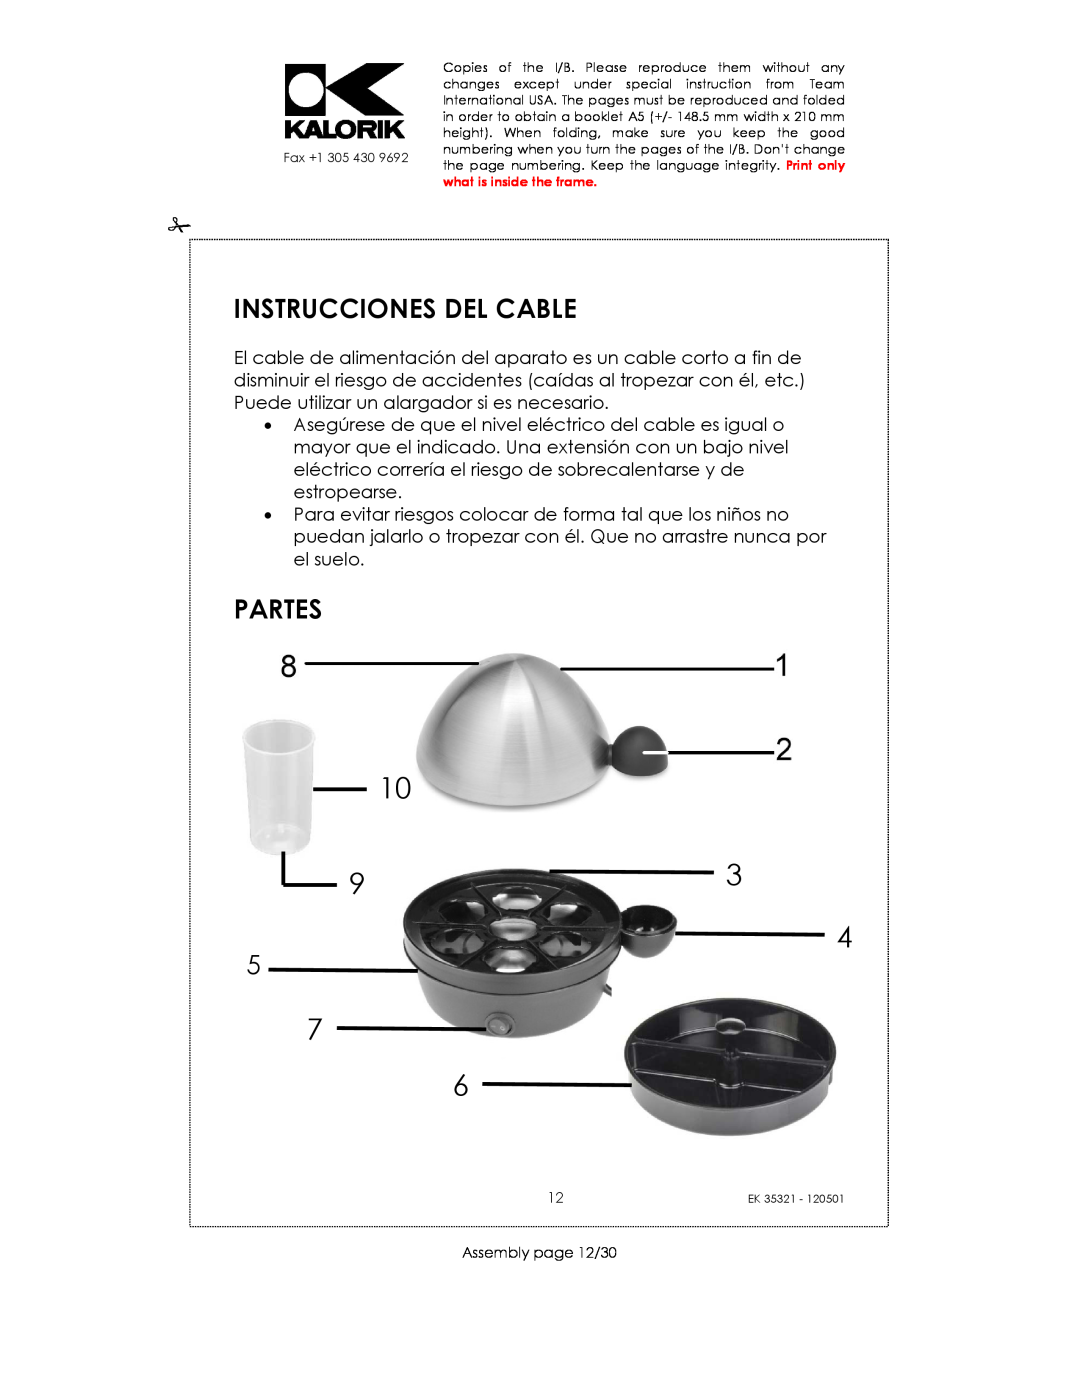 Kalorik EK35321 manual Instrucciones Del Cable, Partes, Assembly page 12/30 